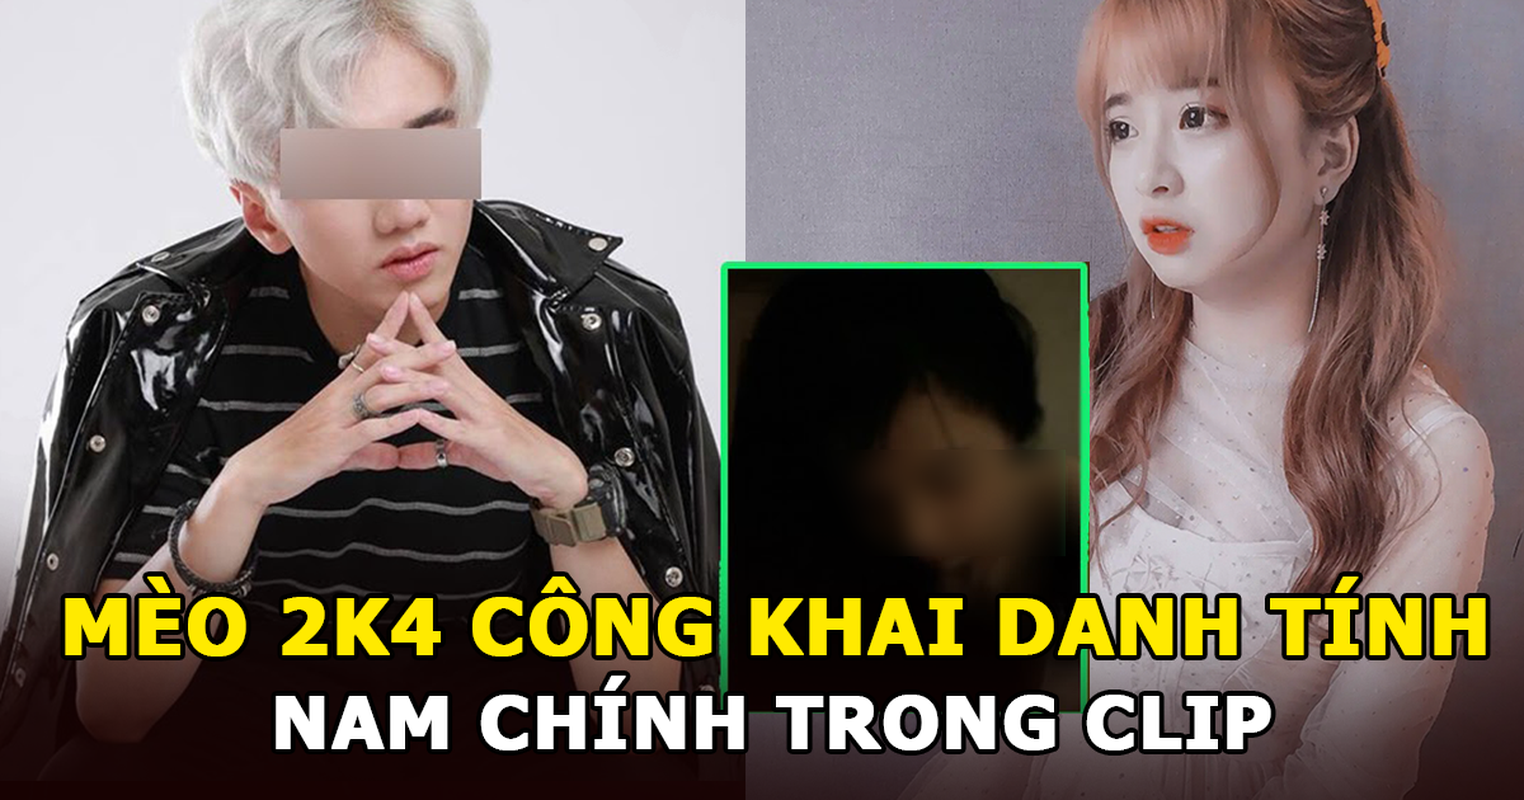 Game thu Be Chanh cung scandal lo clip nong cua ban gai-Hinh-6